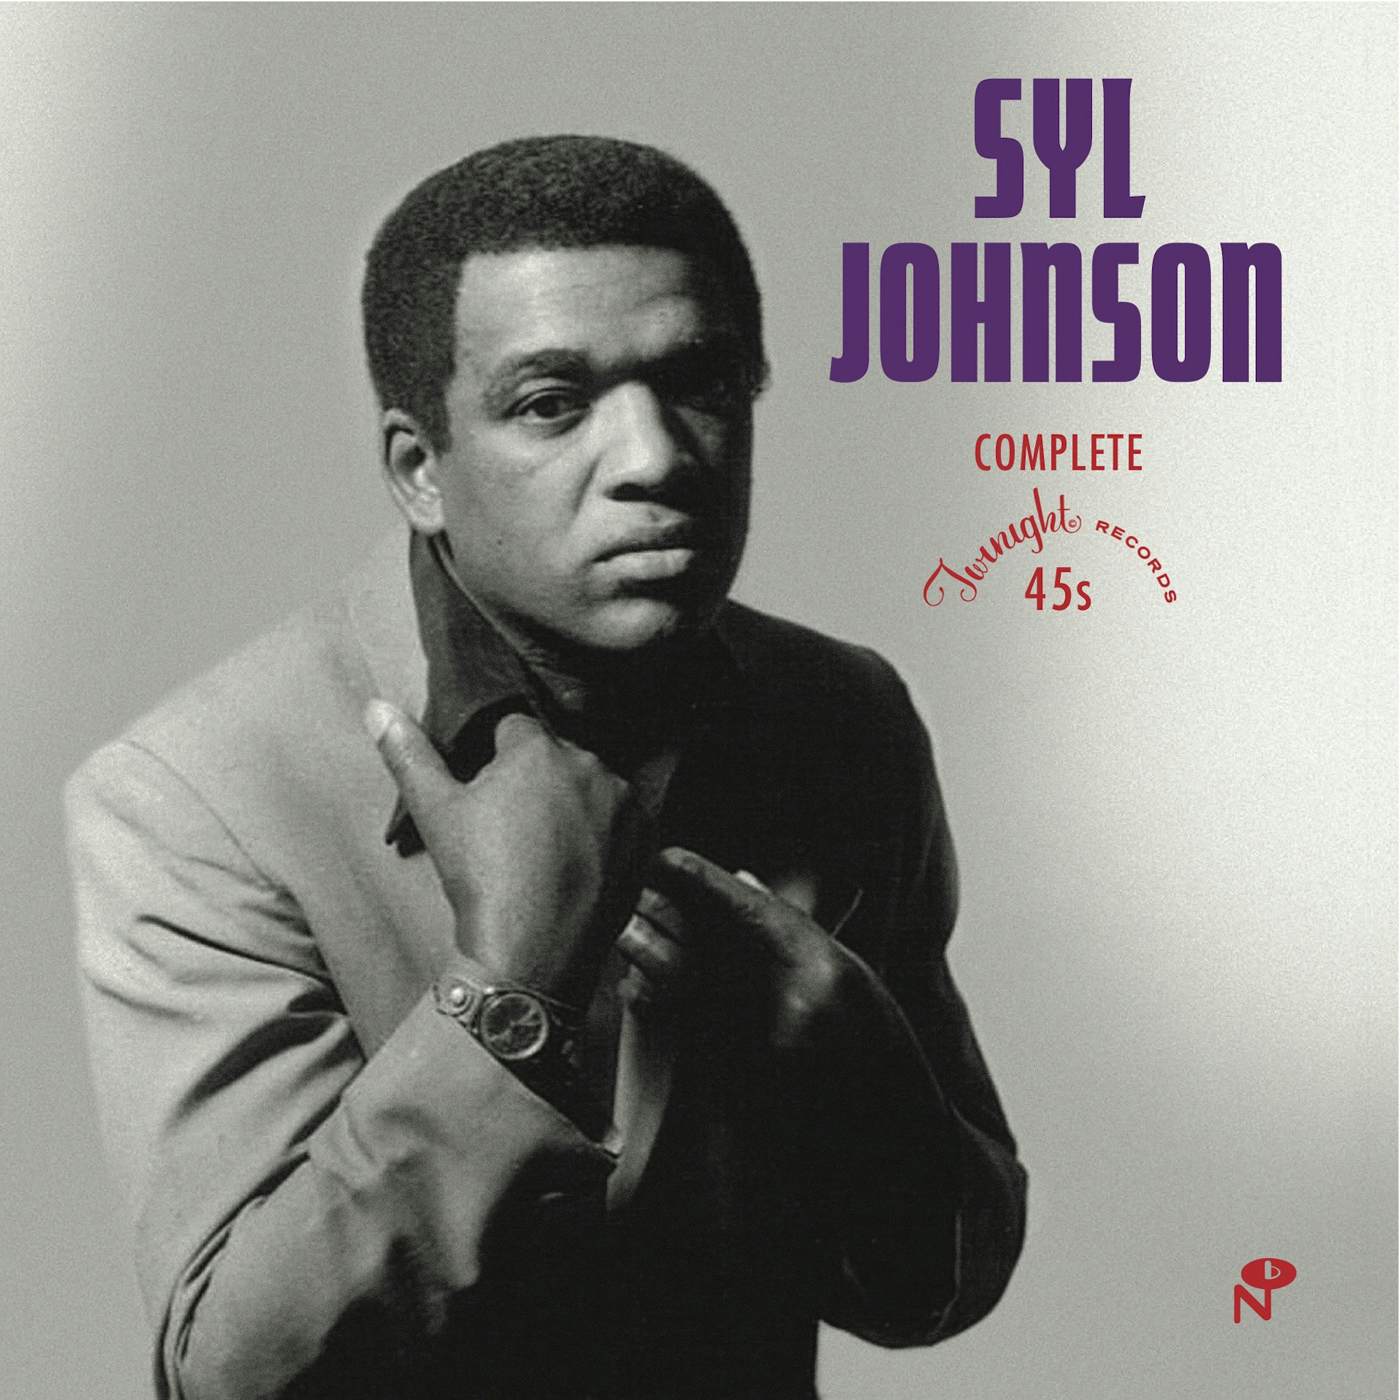 Syl Johnson COMPLETE TWINIGHT SINGLES Vinyl Record